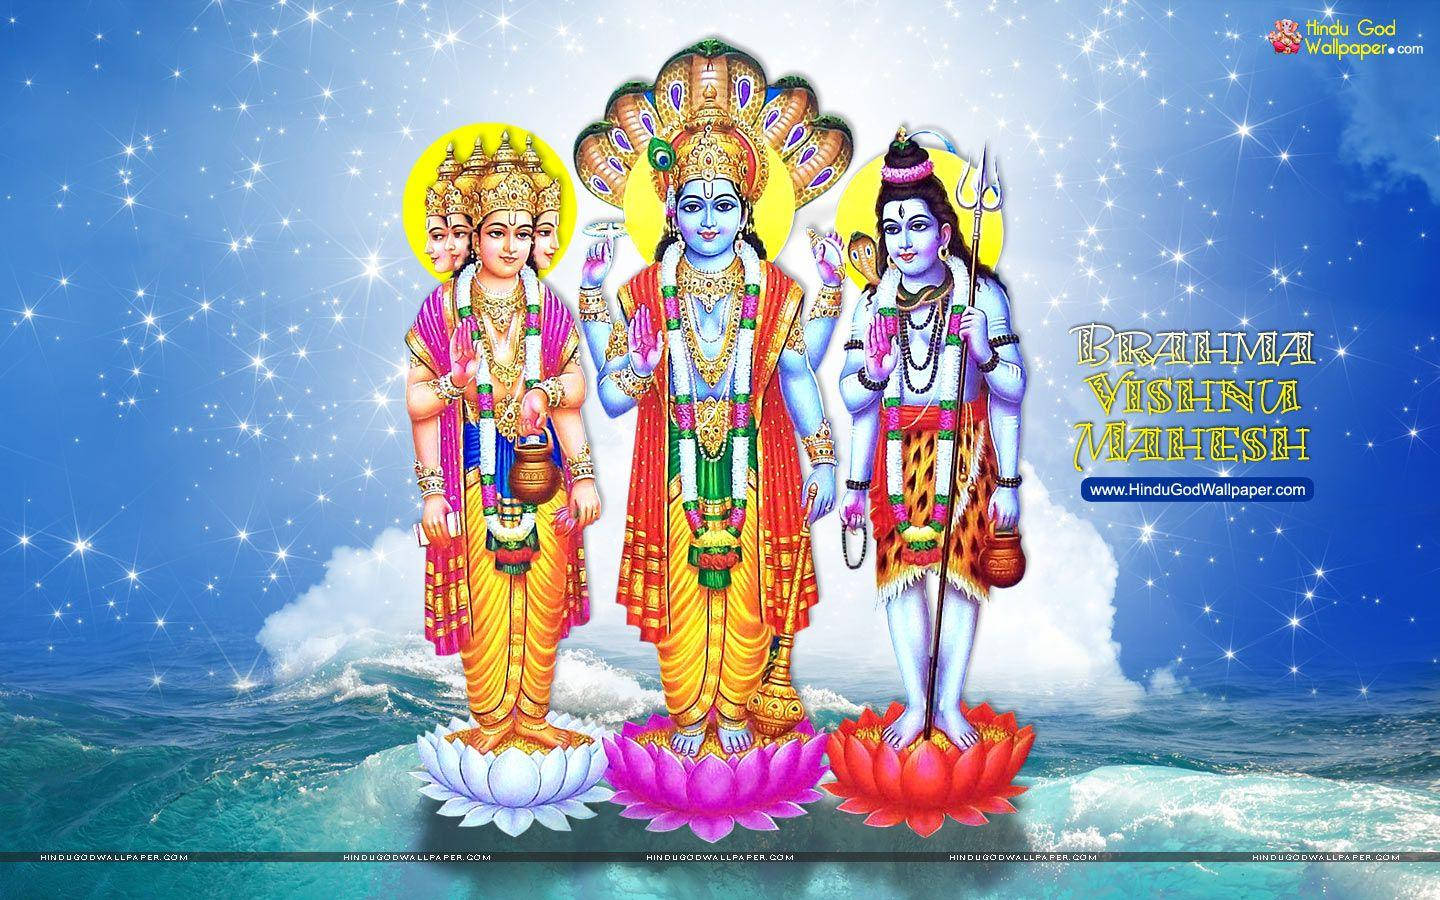 Lord Vishnu In Between Two Goddesses Wallpaper